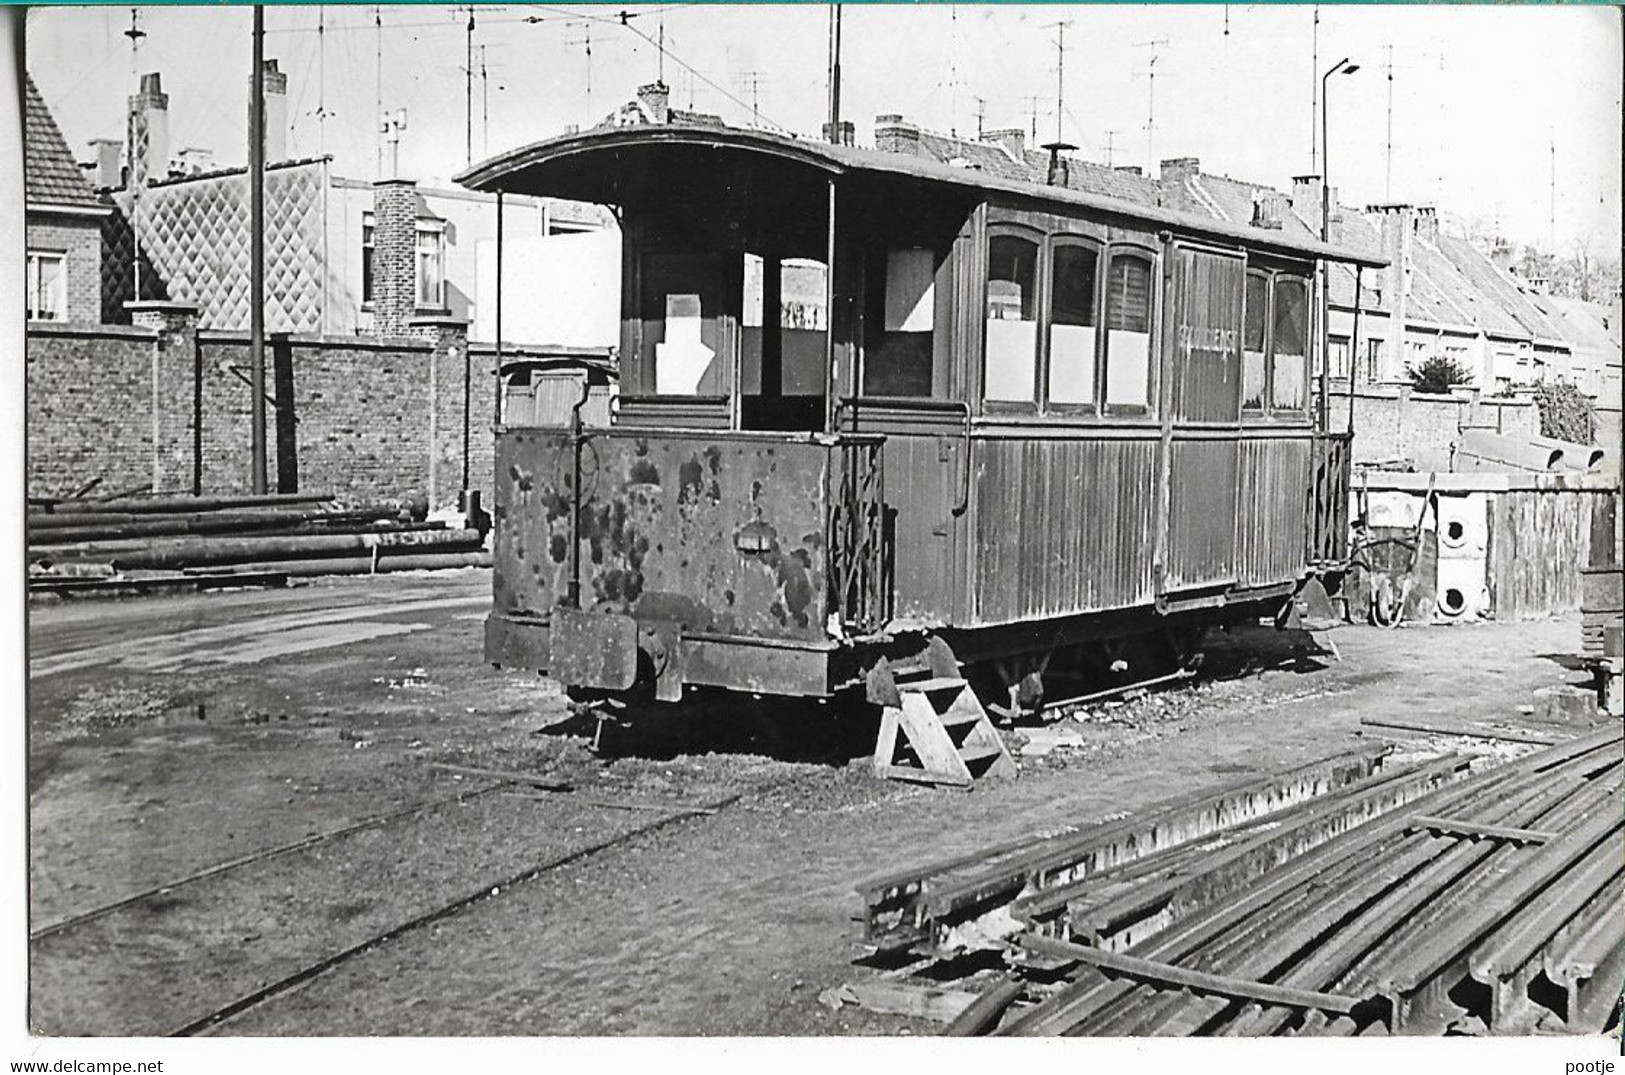 Antwerpen tram foto's